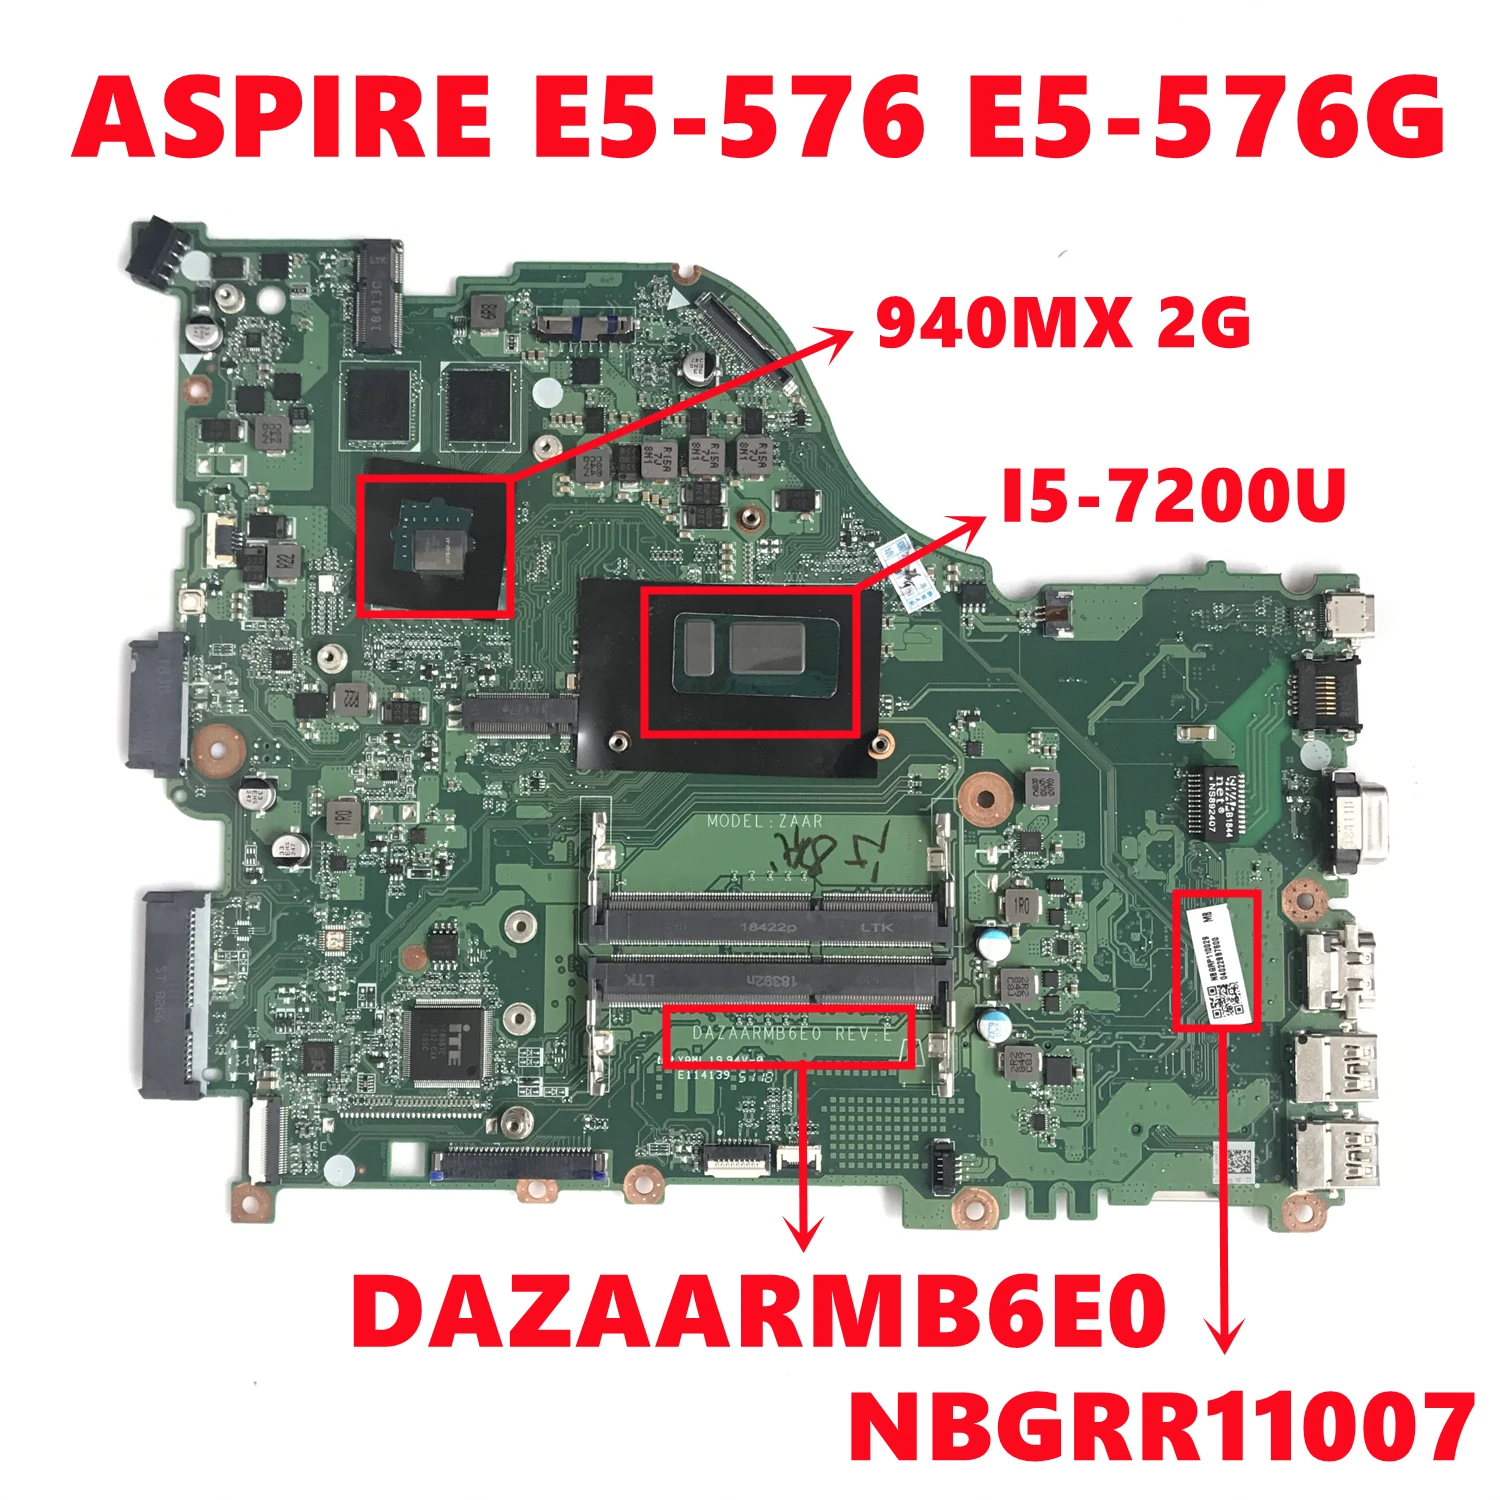 

NBGRR11007 NB.GRR11.007 For Acer ASPIRE E5-576 E5-576G Laptop Motherboard DAZAARMB6E0 With I5-7200U 940MX 2G-GPU DDR3 100% Test